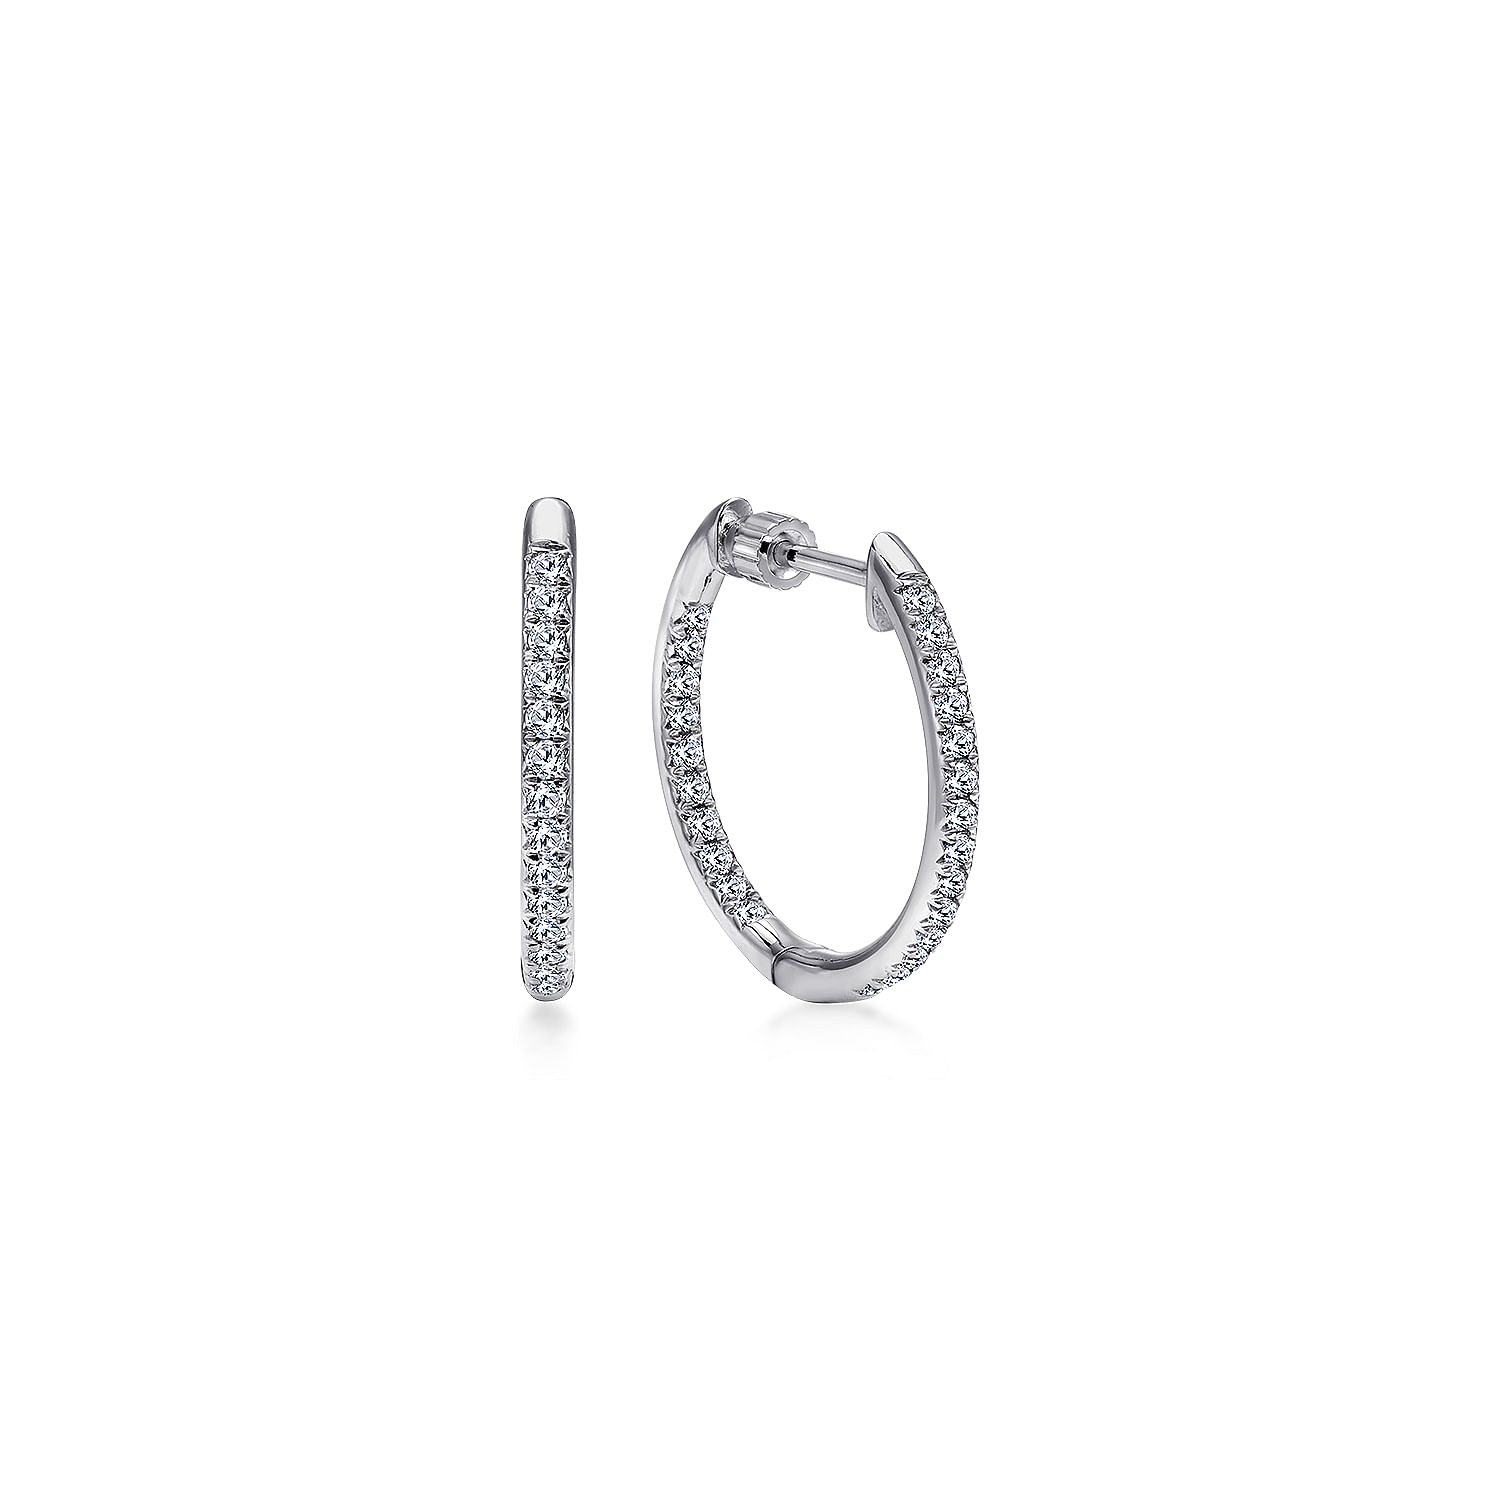 14K White Gold Micro Pavé 15mm Round Inside Out Diamond Hoop Earrings